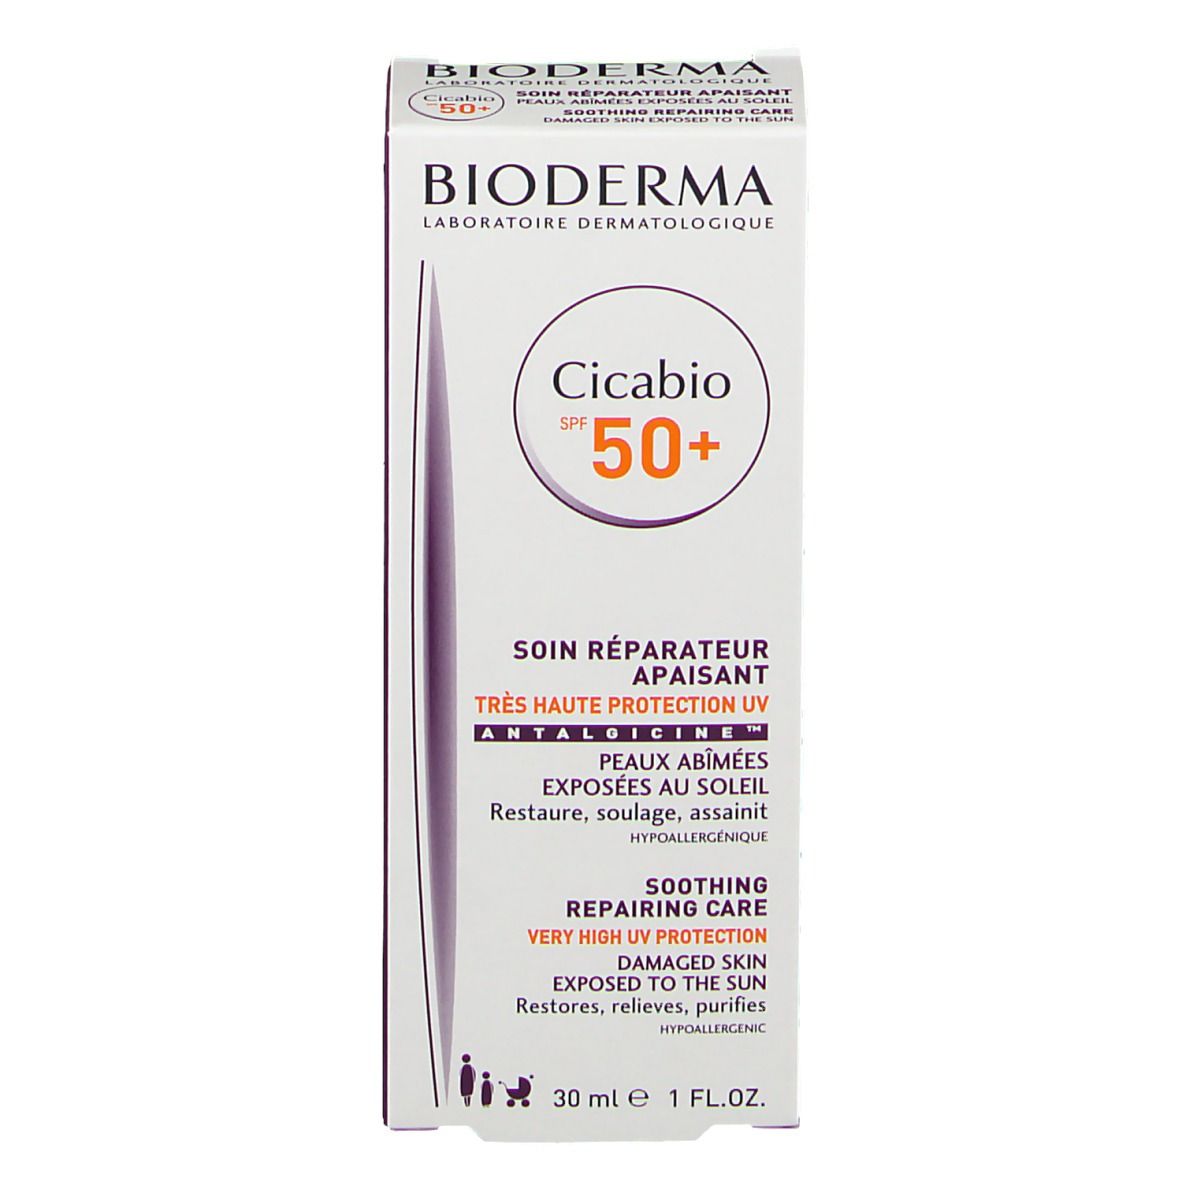 Bioderma Cicabio crème réparatrice apaisante SPF 50+